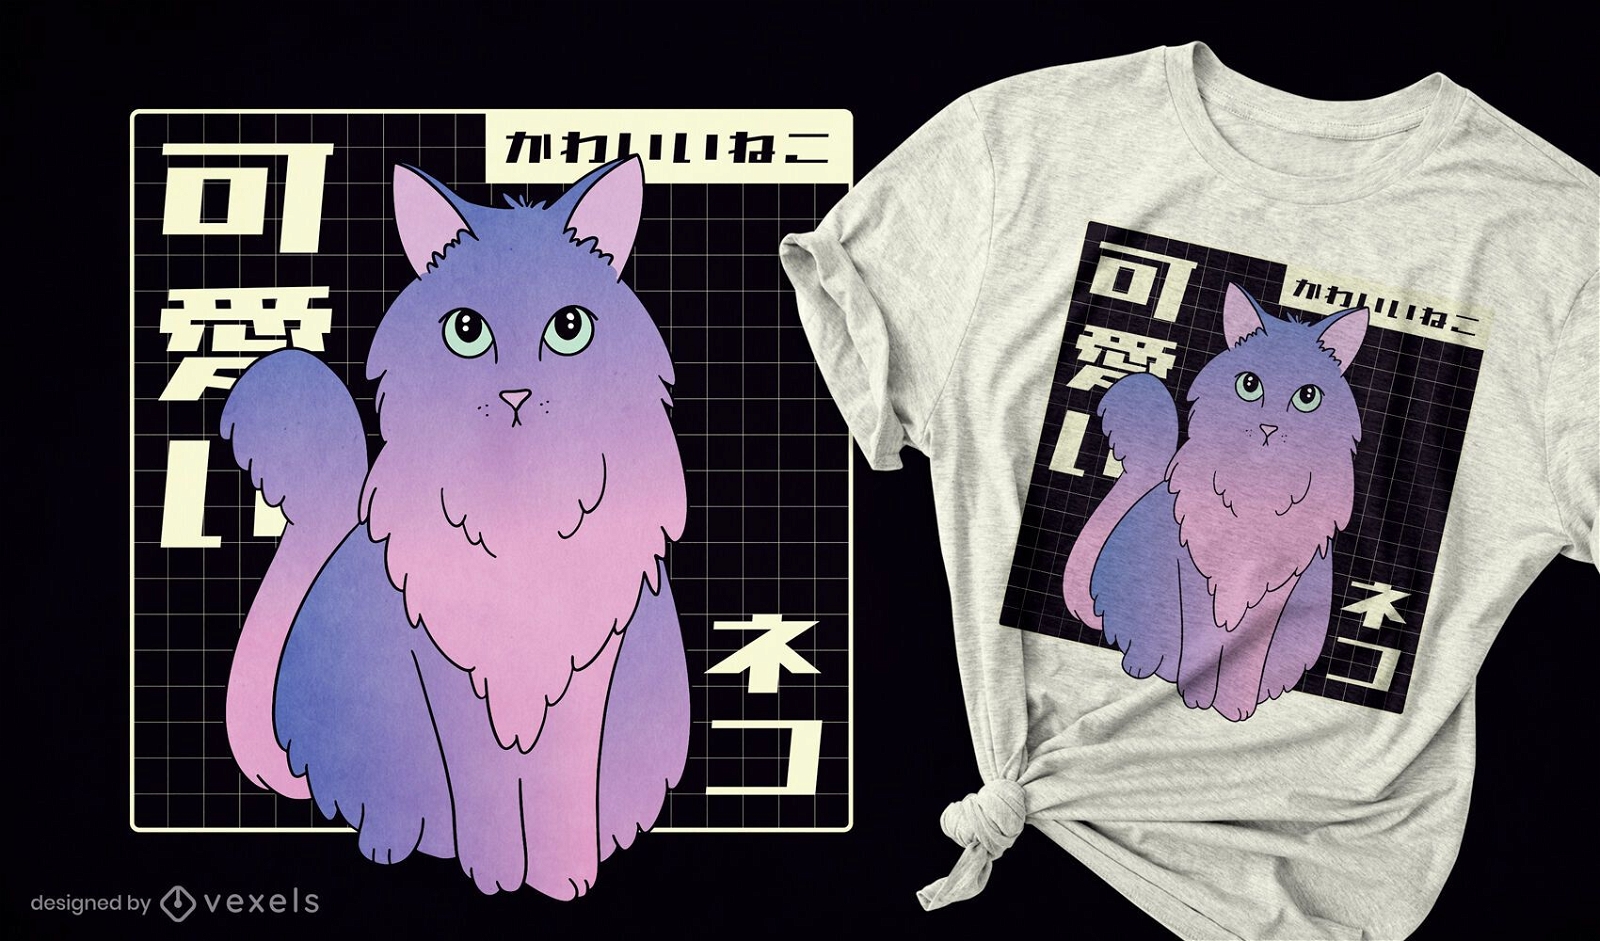 Dise?o de camiseta vaporwave cat.